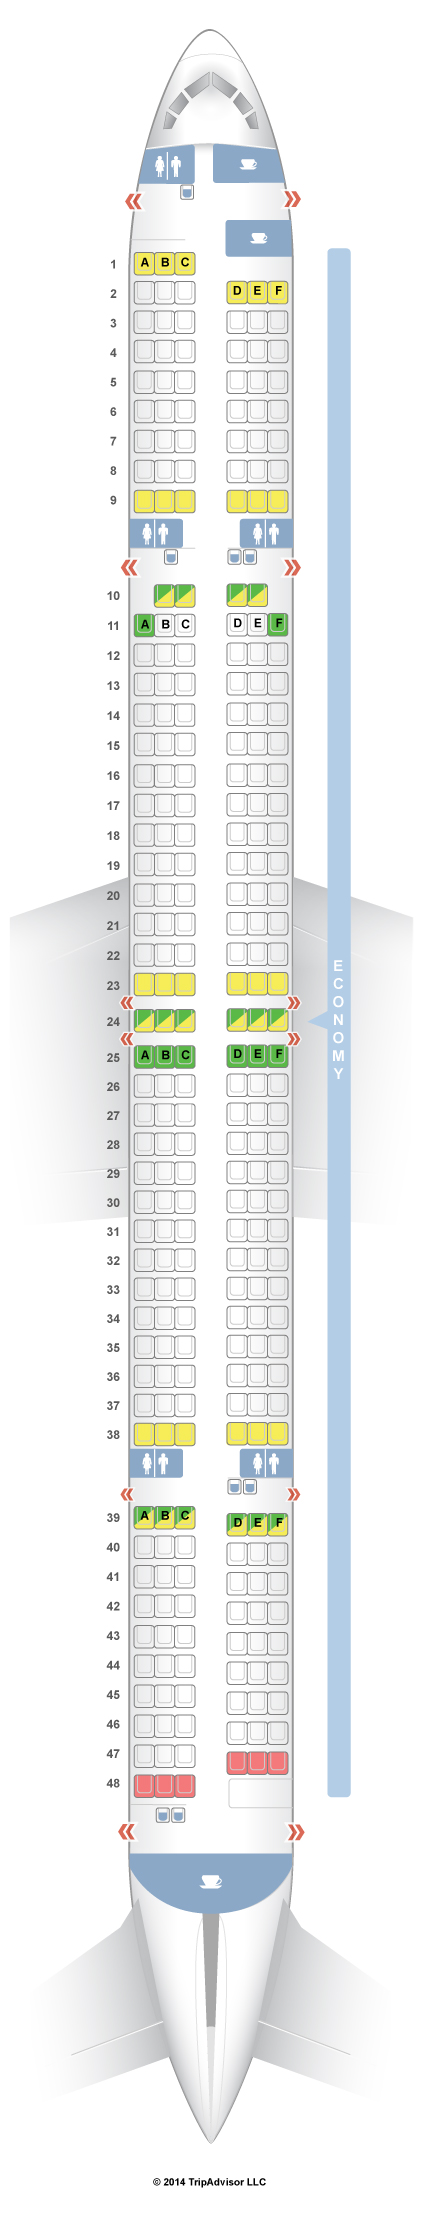 Boeing 757 Passenger Seating Chart